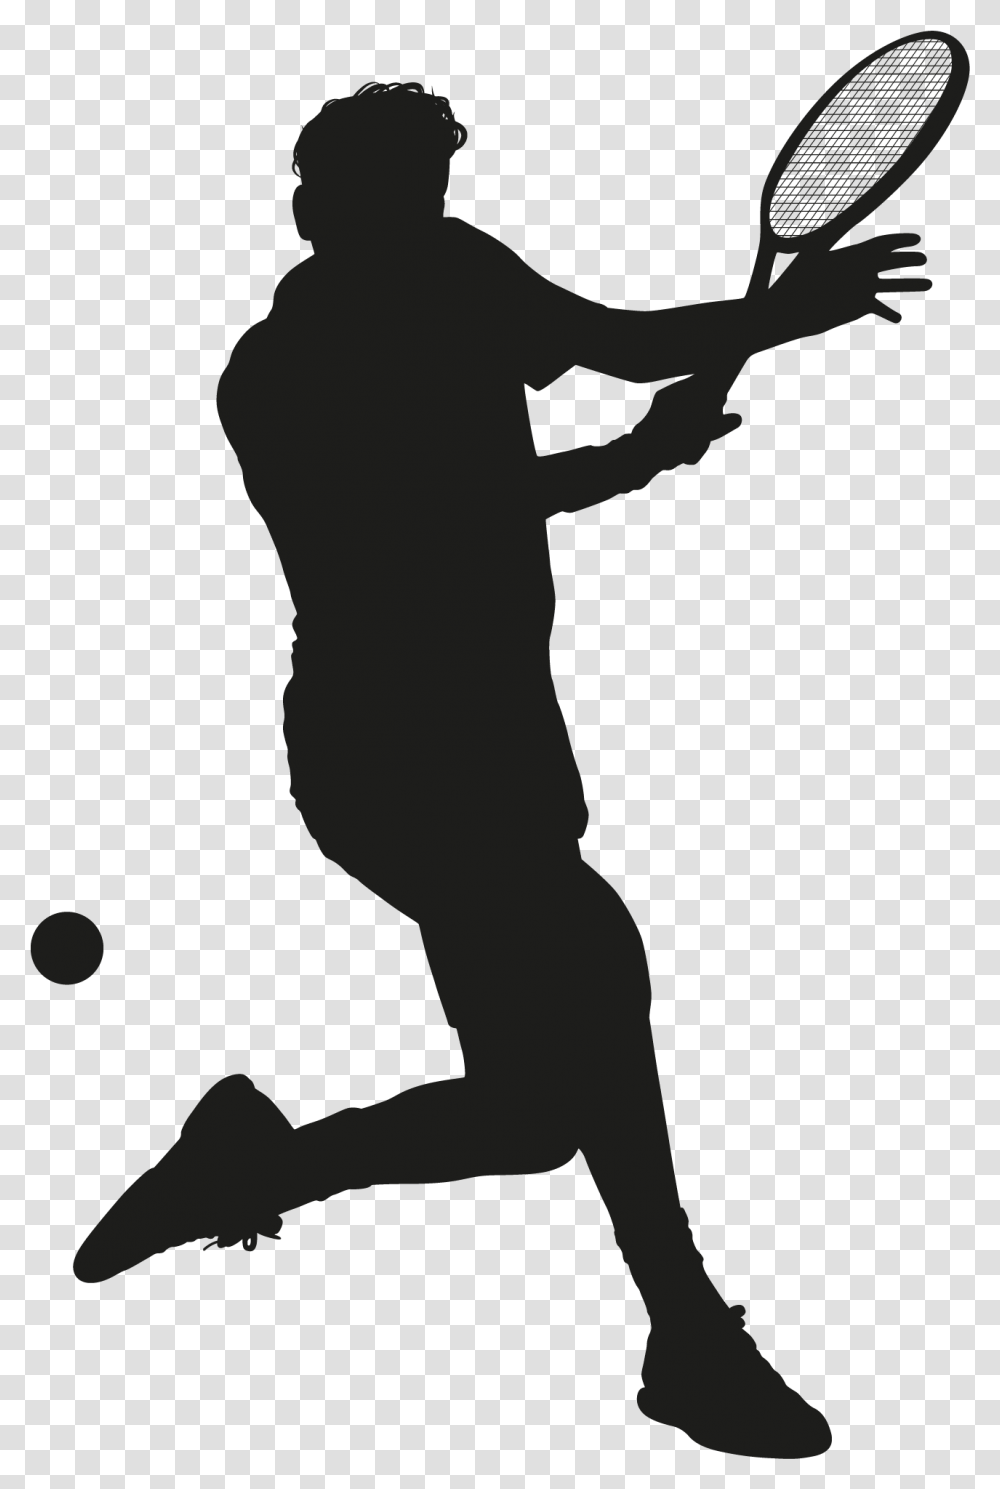 Tennis Squash Racket Clip Art Squash Racket Clip Art, Person, Human, Kneeling, Silhouette Transparent Png